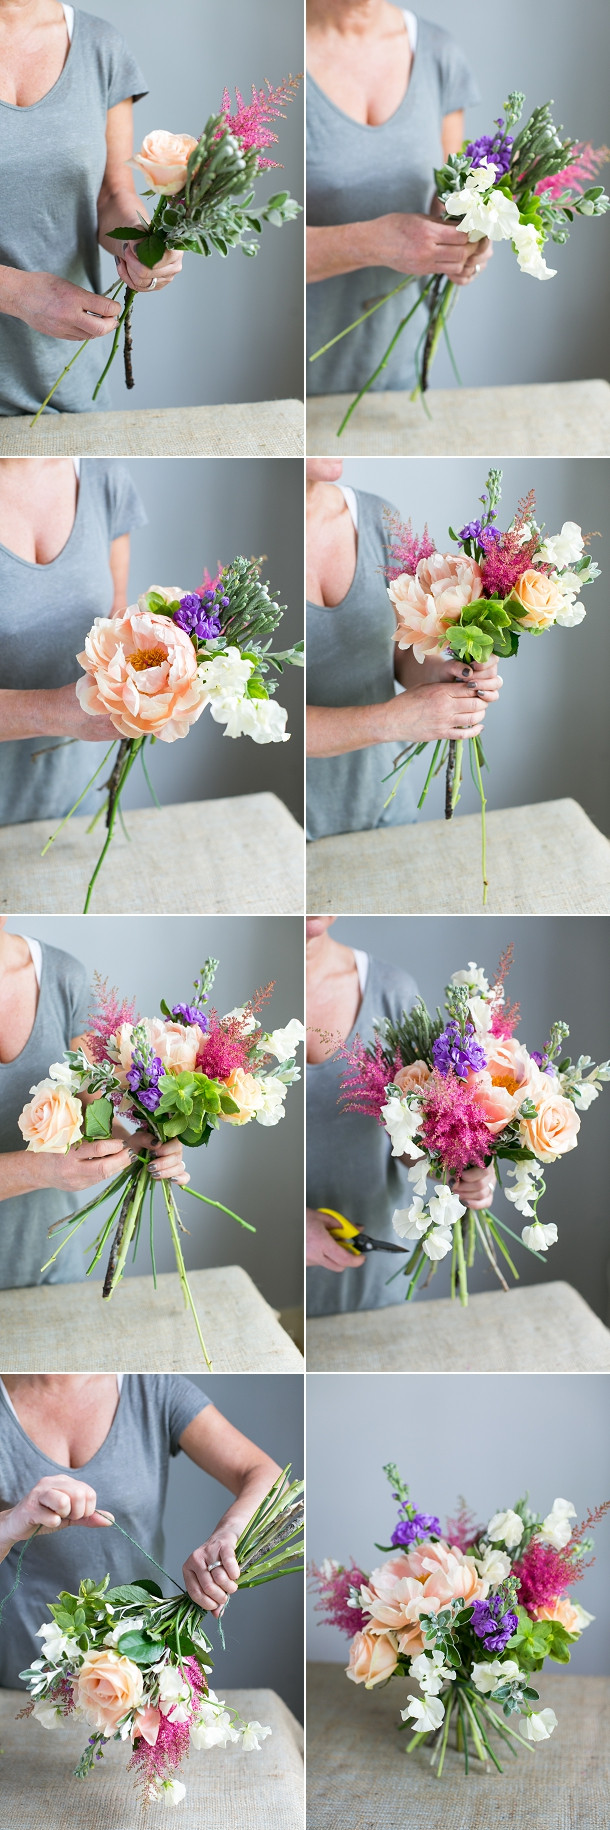 DIY Flower Arrangements For Wedding
 DIY Spring bouquet tutorial with peonies